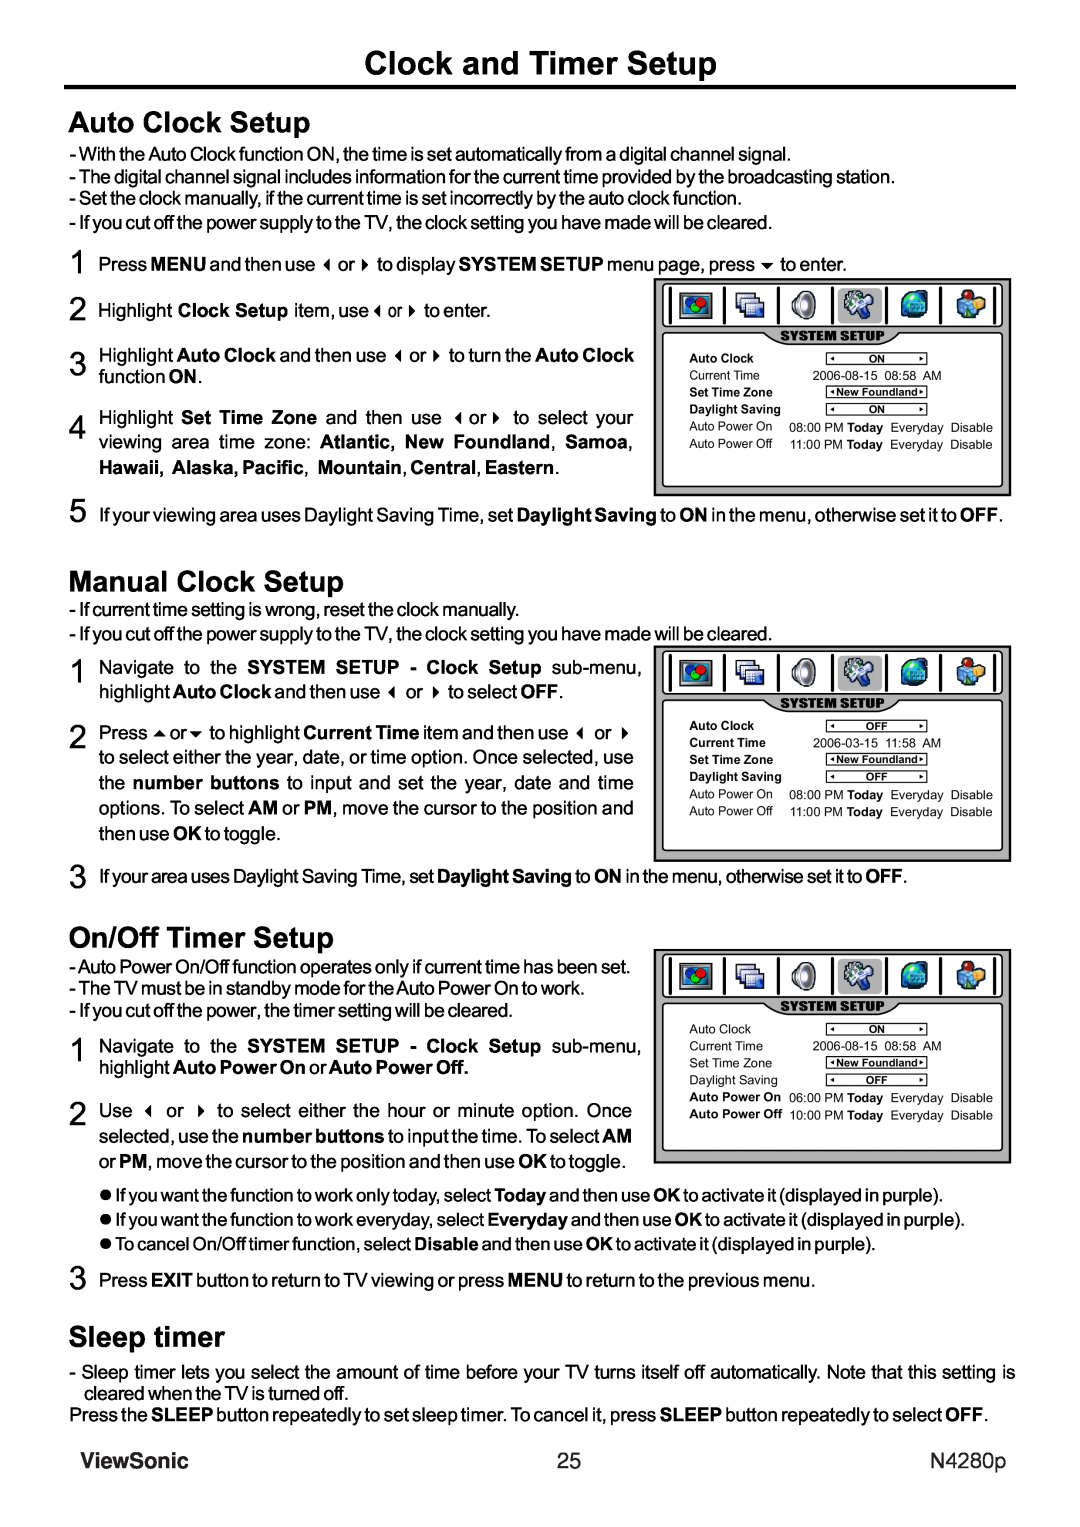 ViewSonic N4280p Clock and Timer Setup, Auto Clock Setup, Manual Clock Setup, On/Off Timer Setup, Sleep timer, ViewSonic 